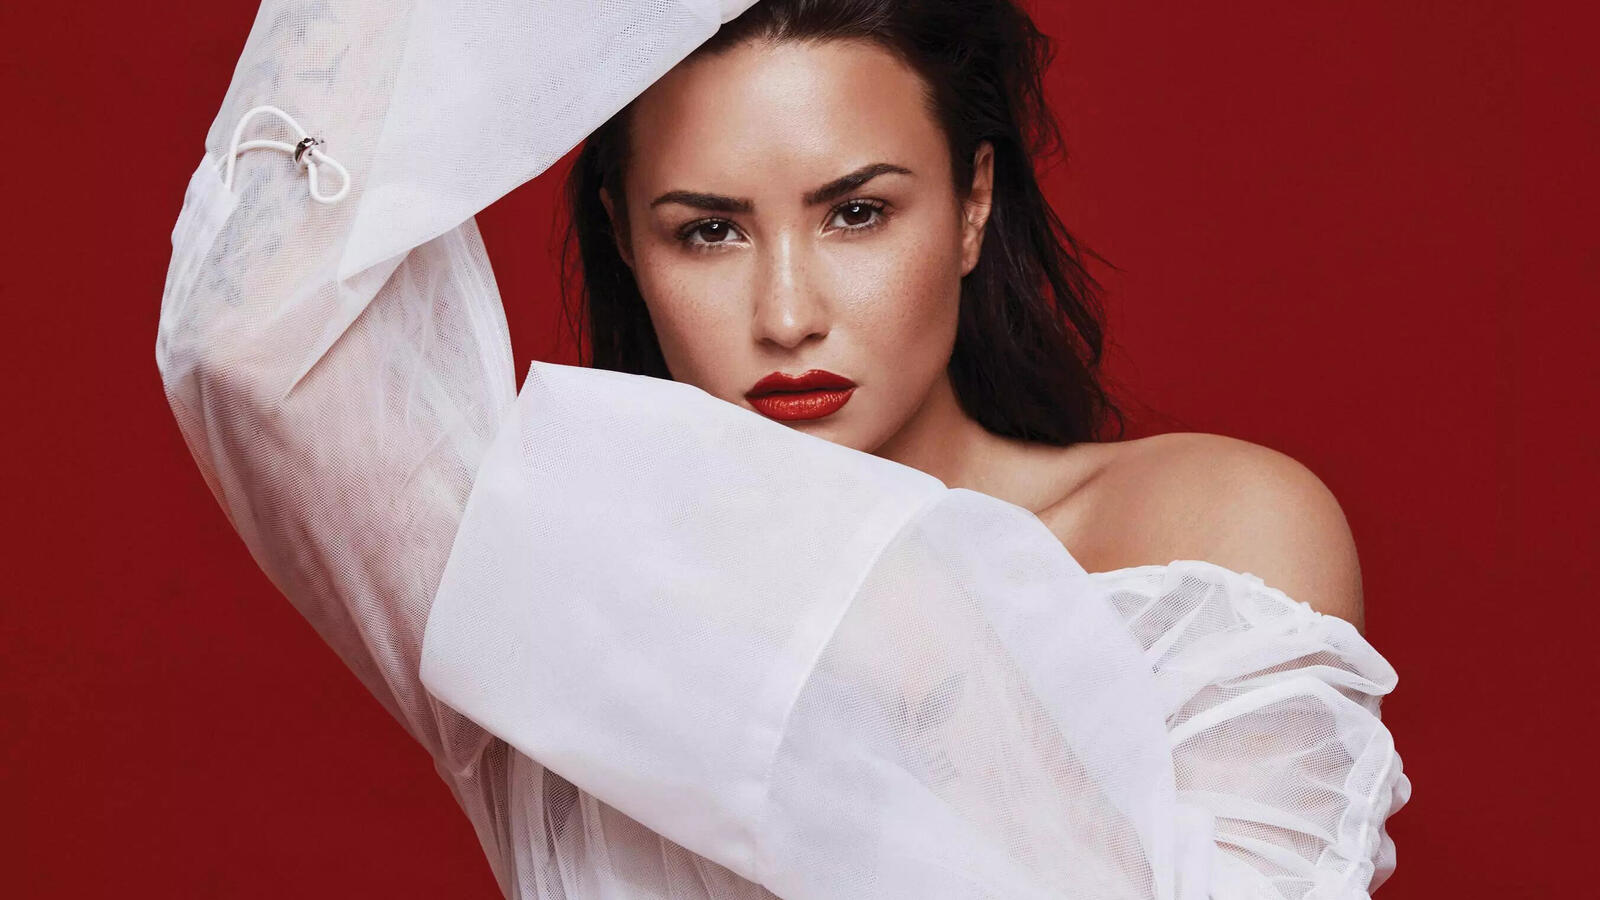 Wallpapers Demi Lovato celebrity girls on the desktop